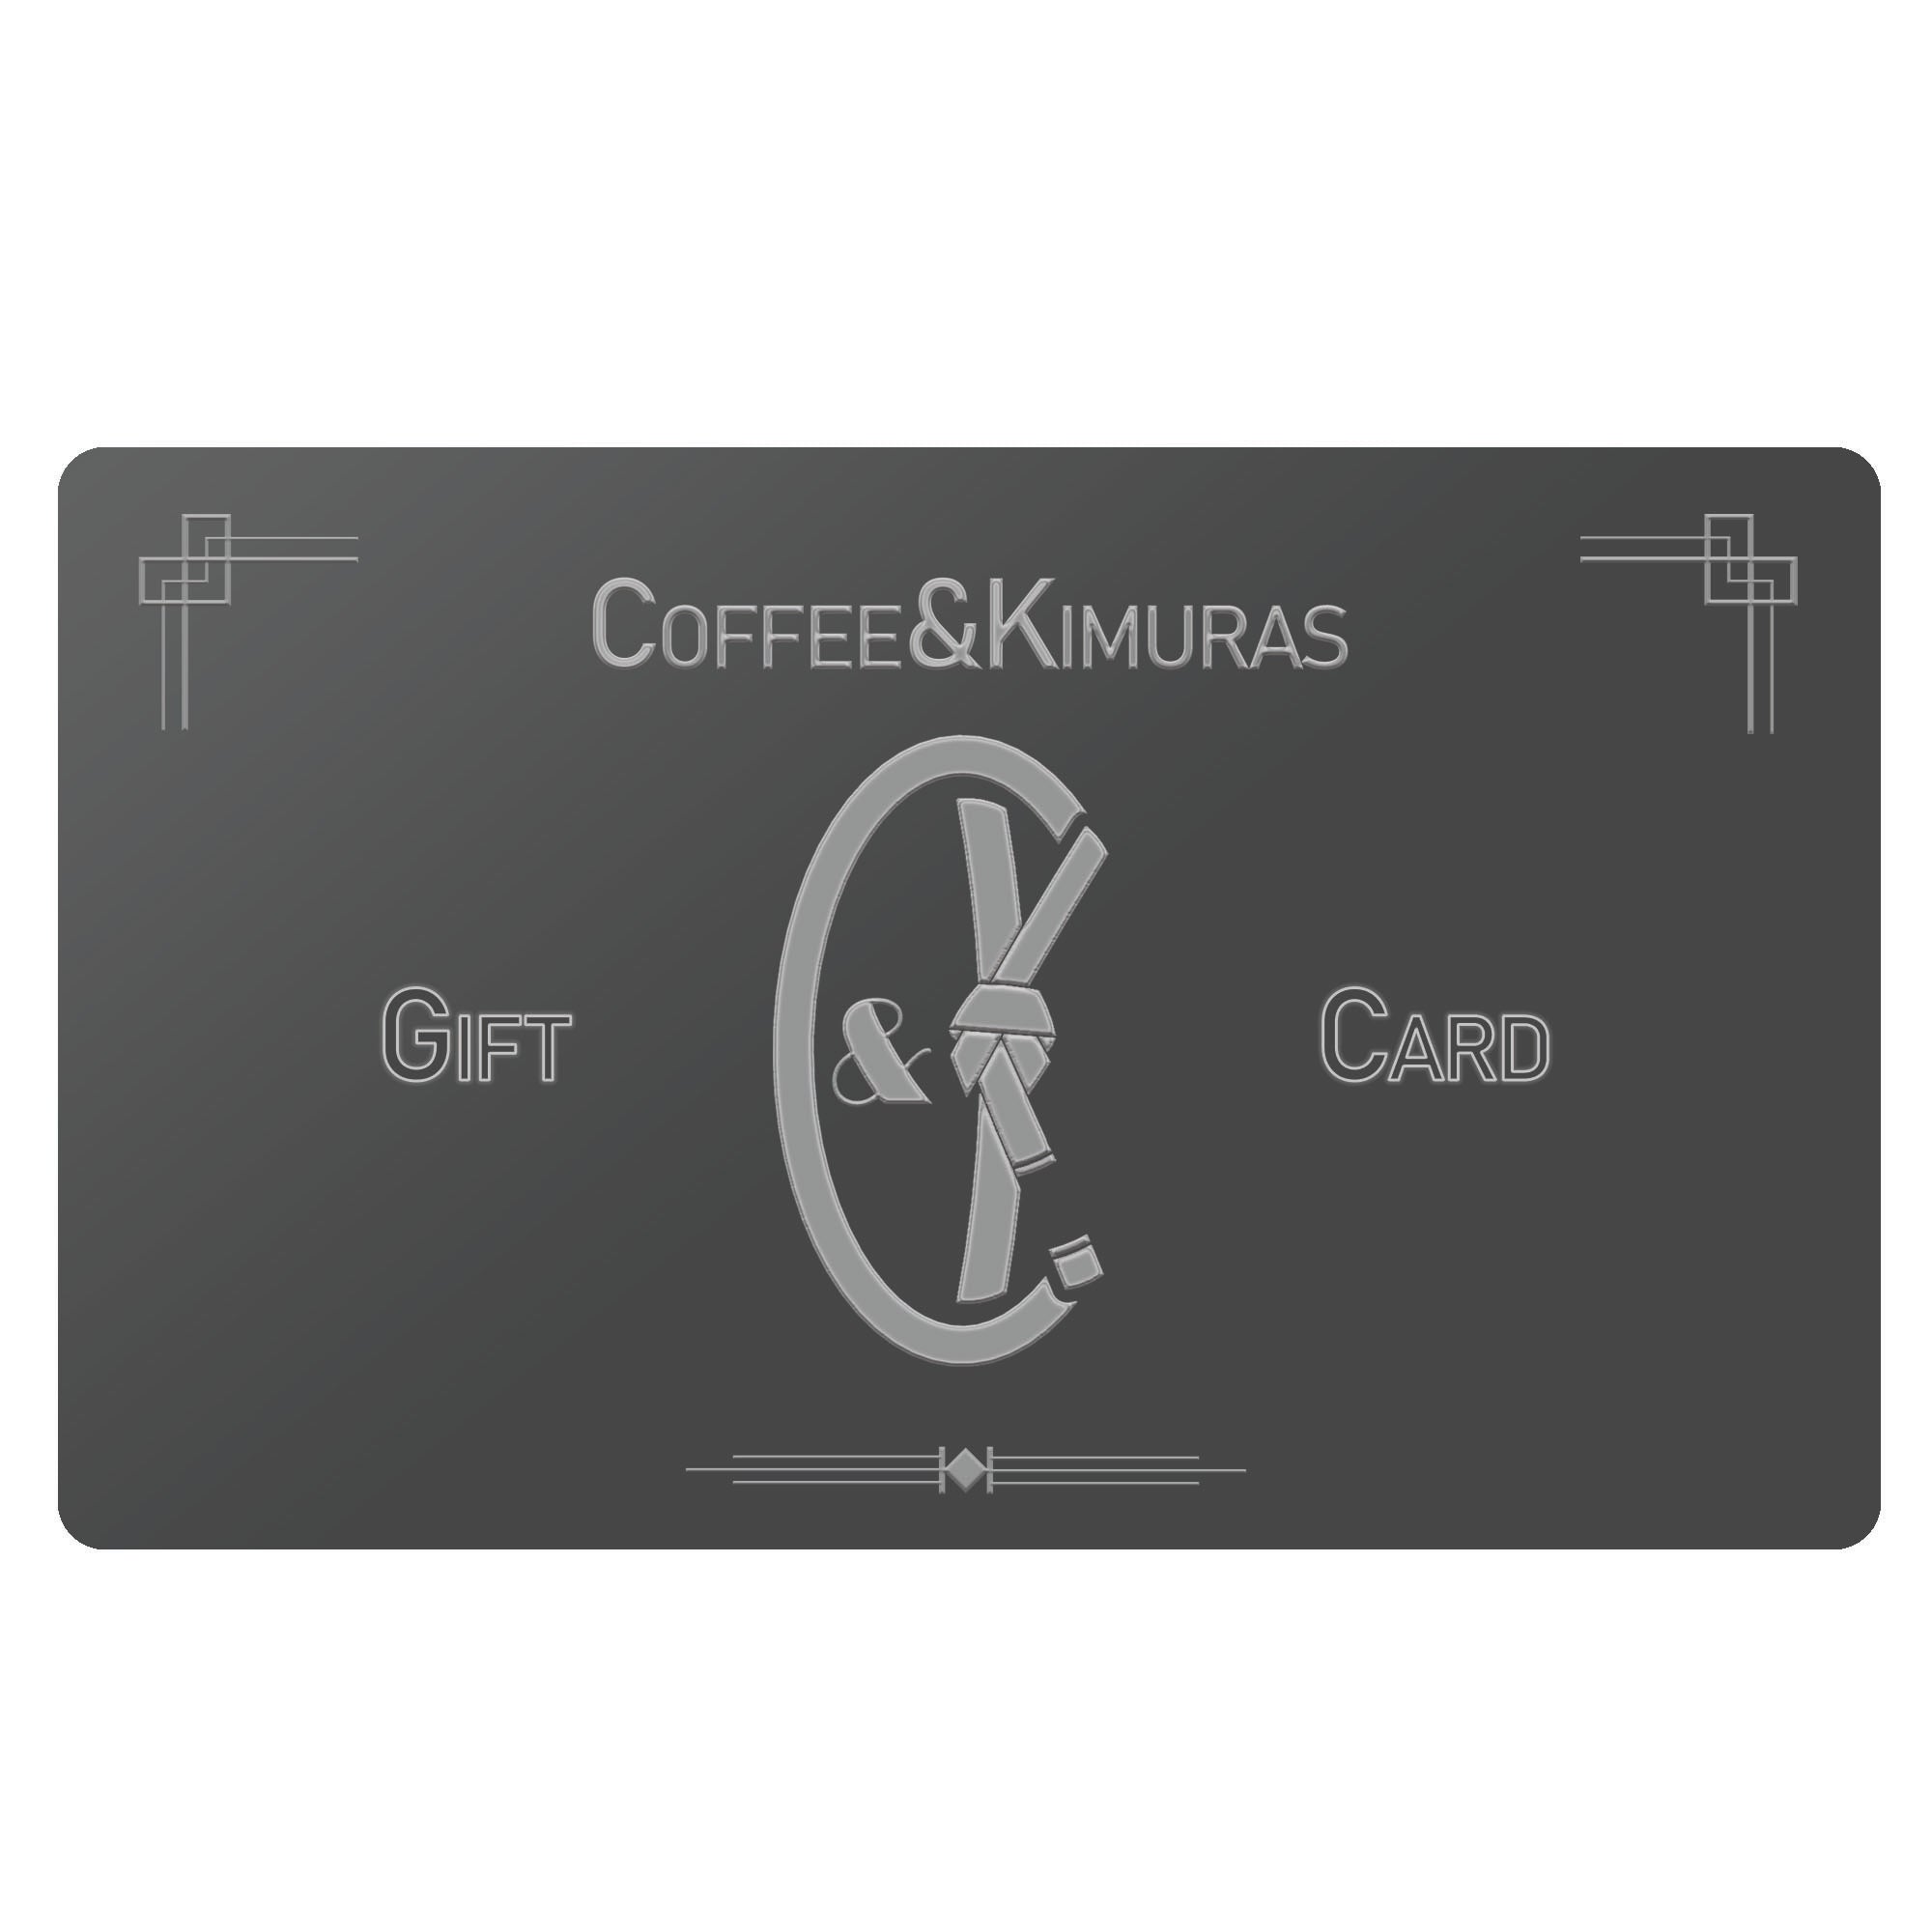 C&K Gift Card - Coffee&Kimuras